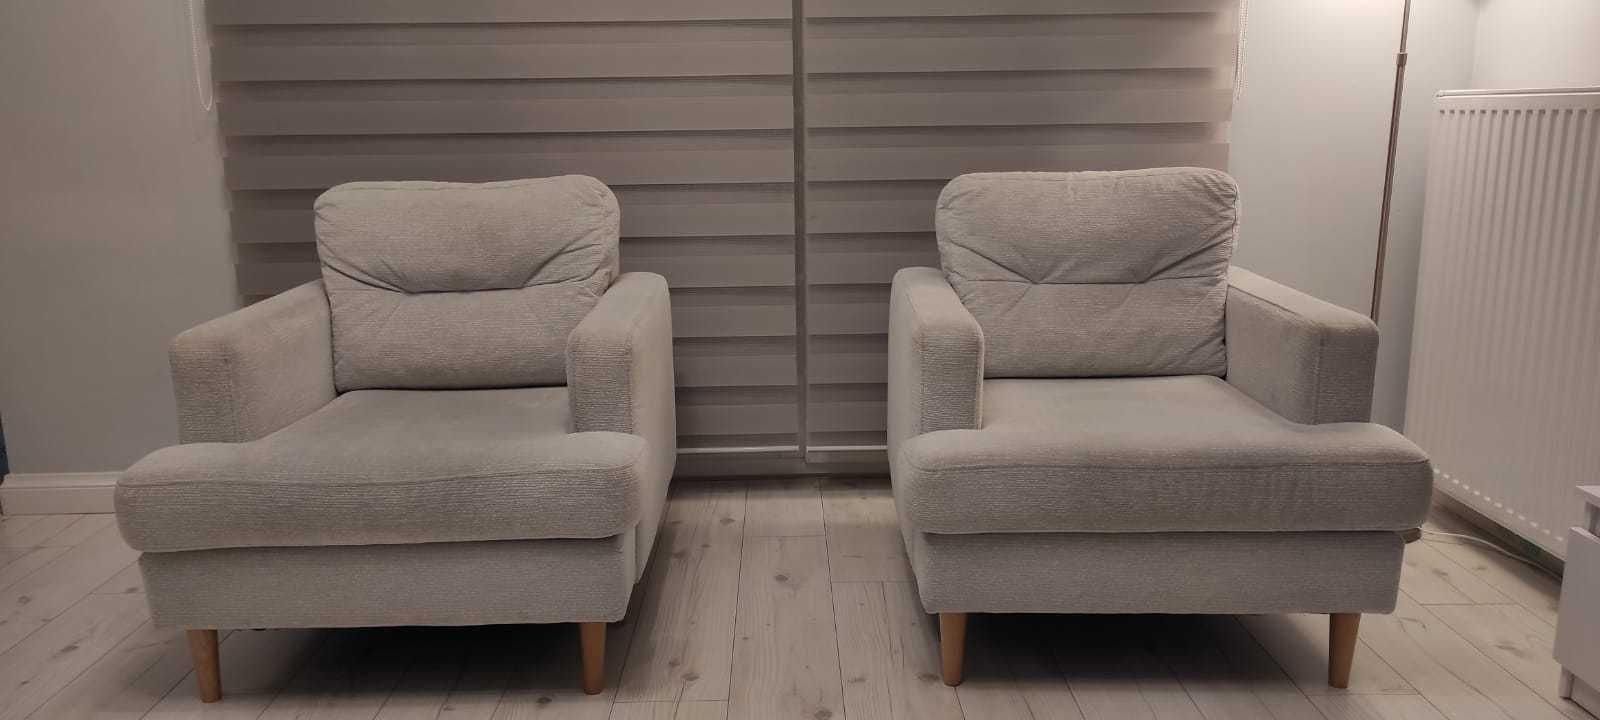 Meble 1 Sofa 2 Fotele AGATA Używane Dobry Stan